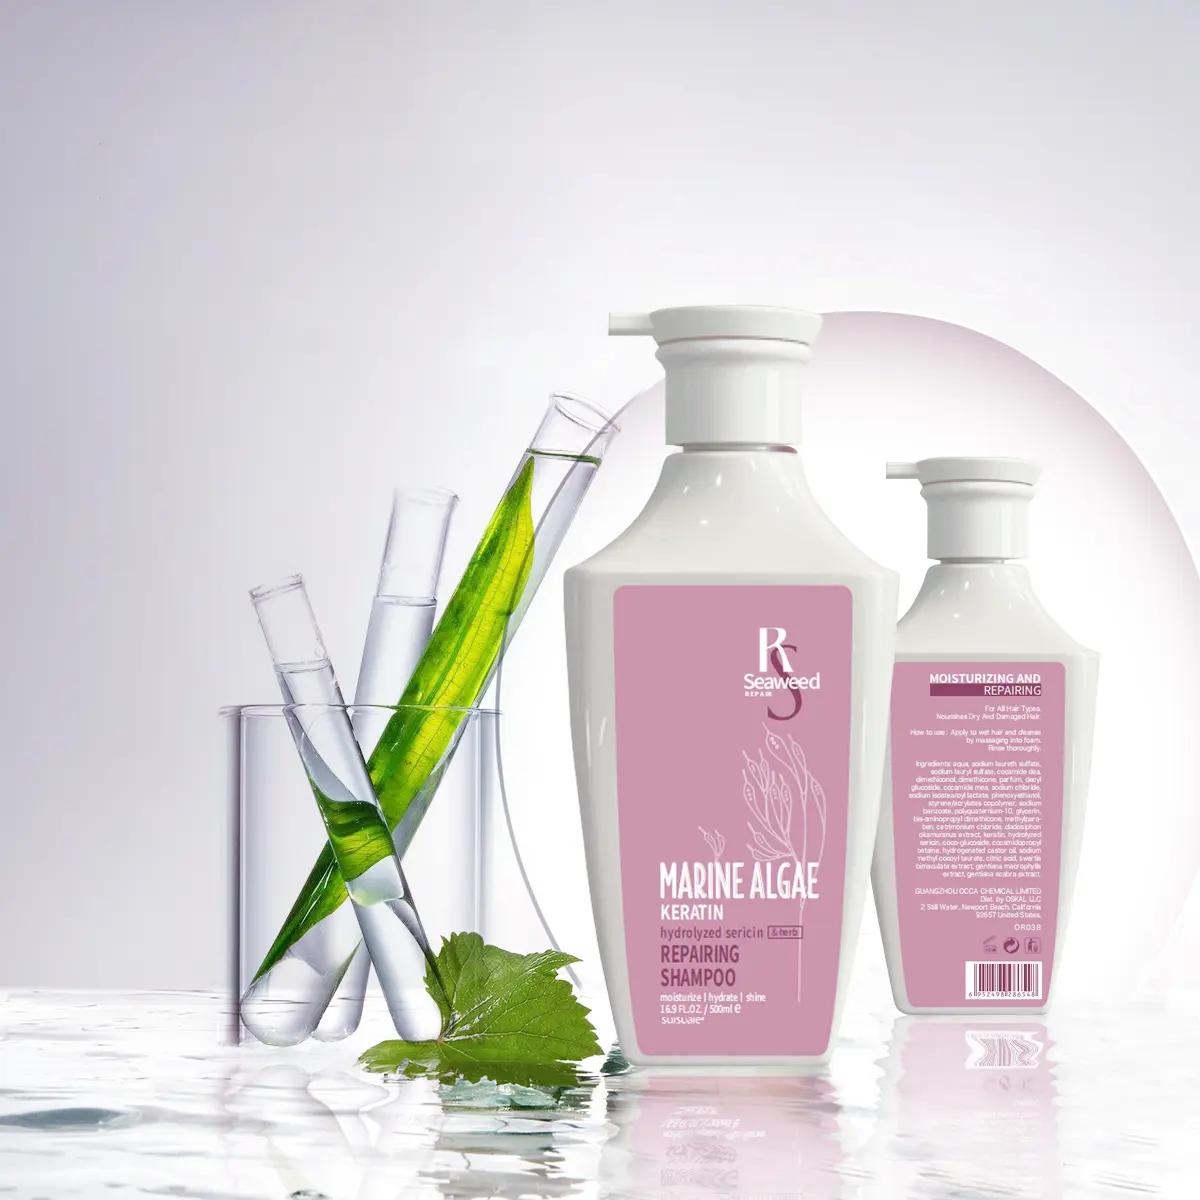 Personal Salon Use Herbal Marine Algae Repairing Protein Hair Nourishing Care Natural Organic Shampoo